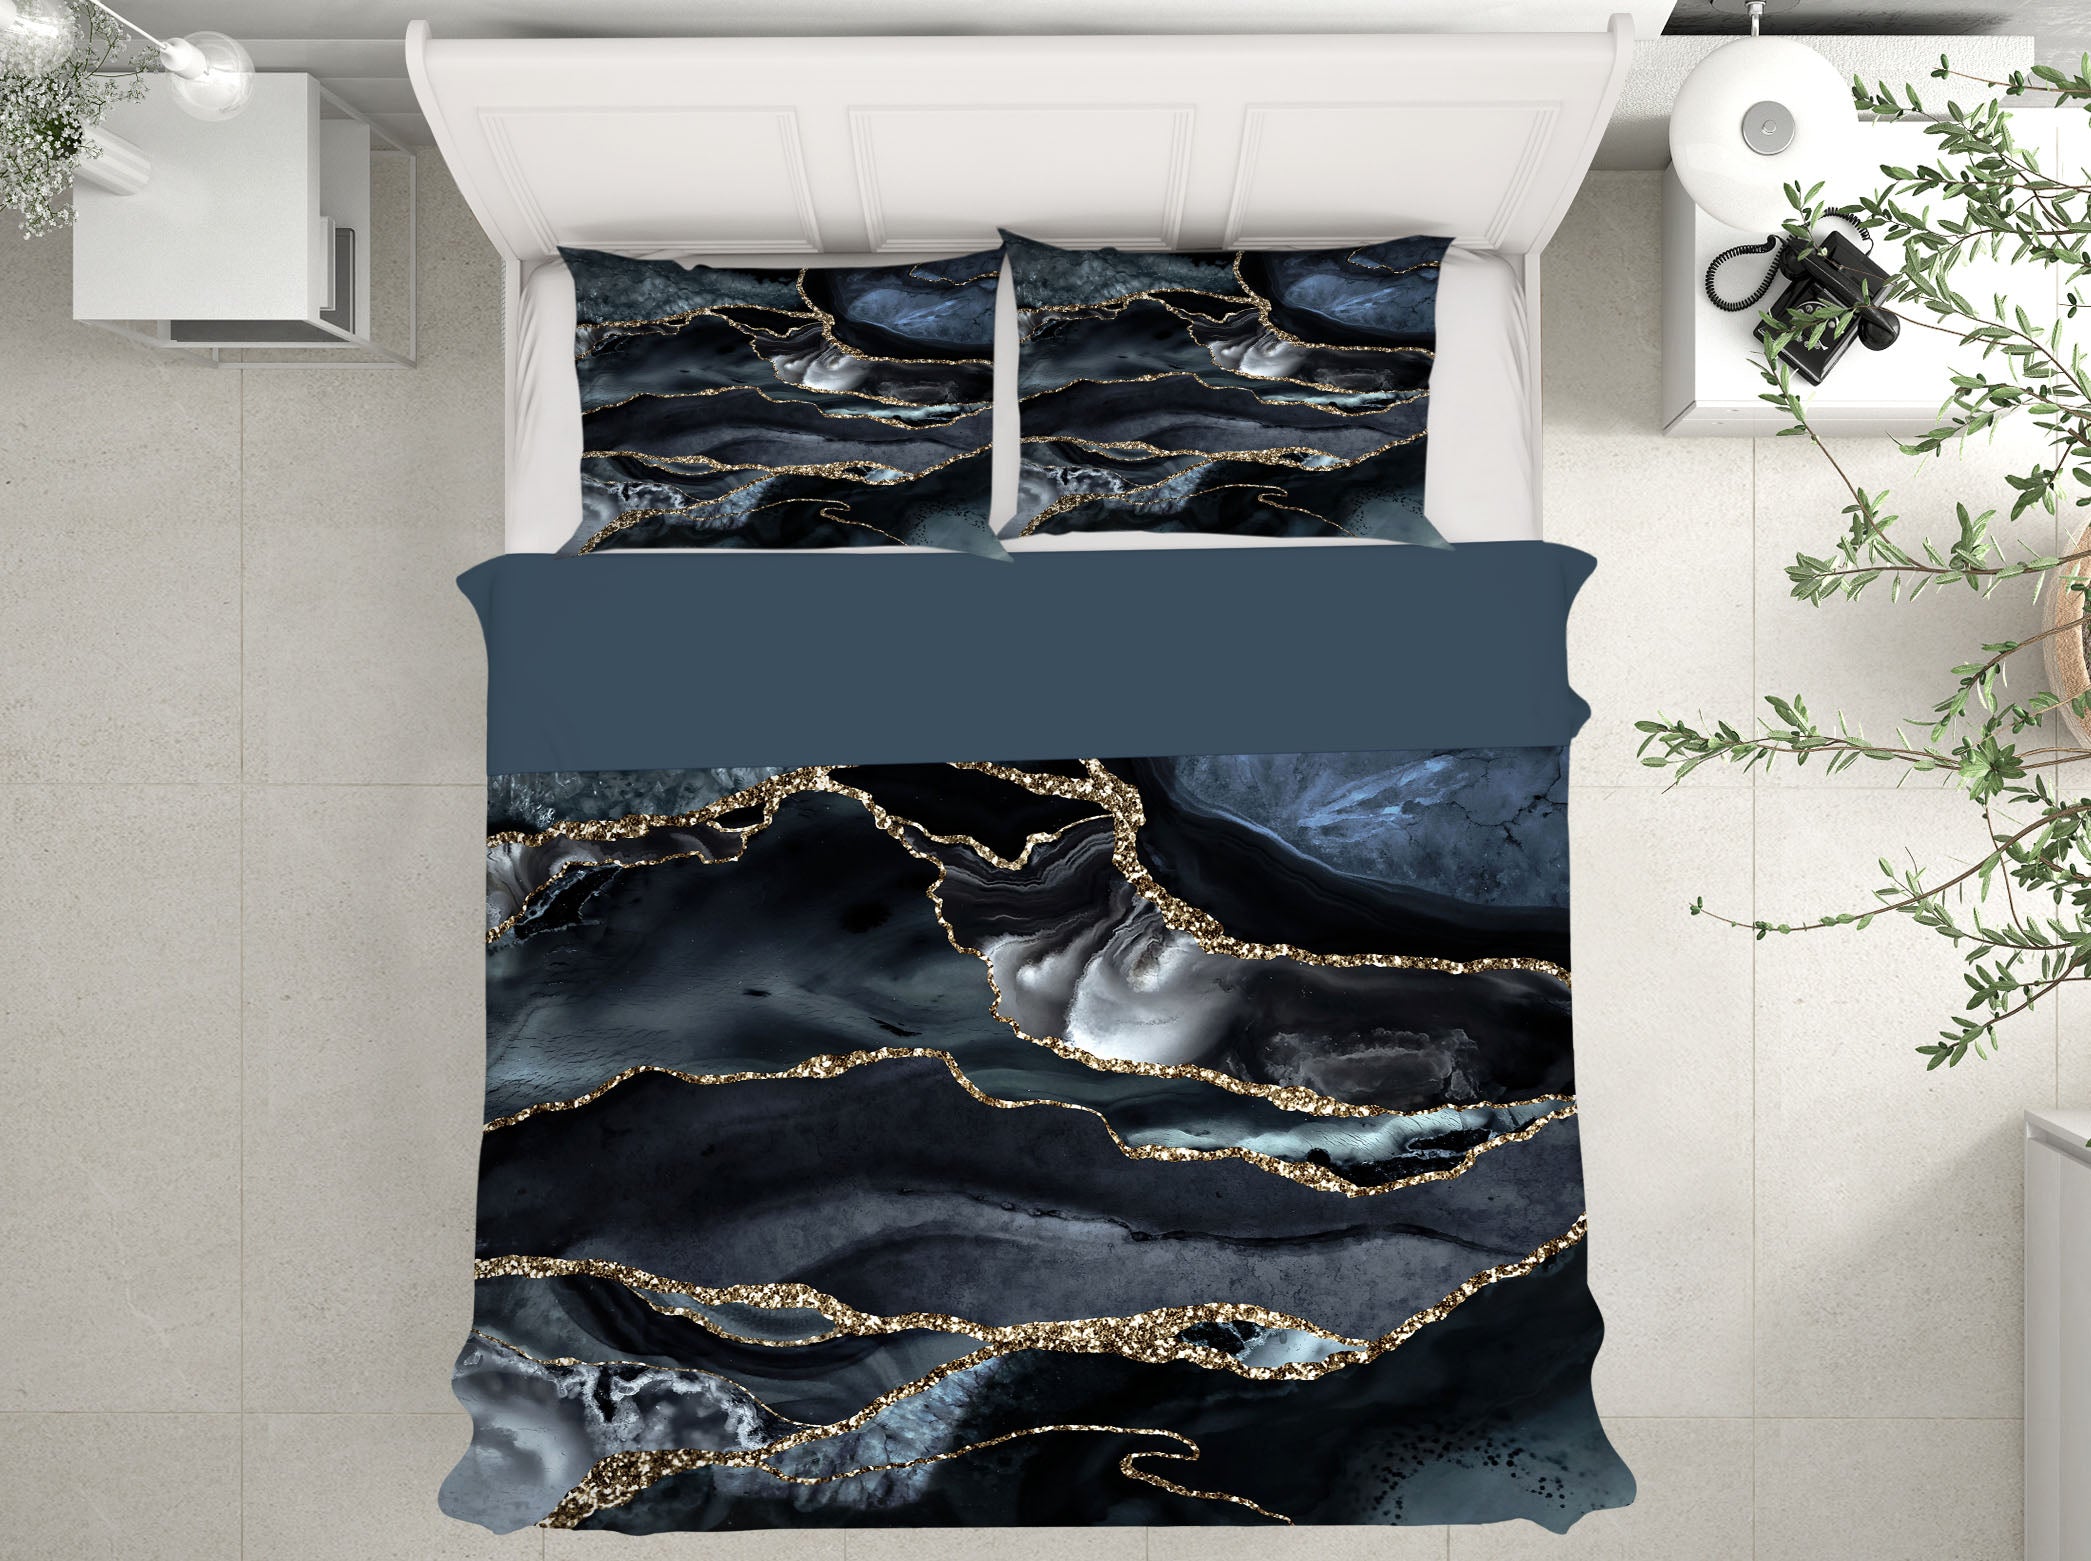 3D Black Gold Rim Marble 18129 Uta Naumann Bedding Bed Pillowcases Quilt